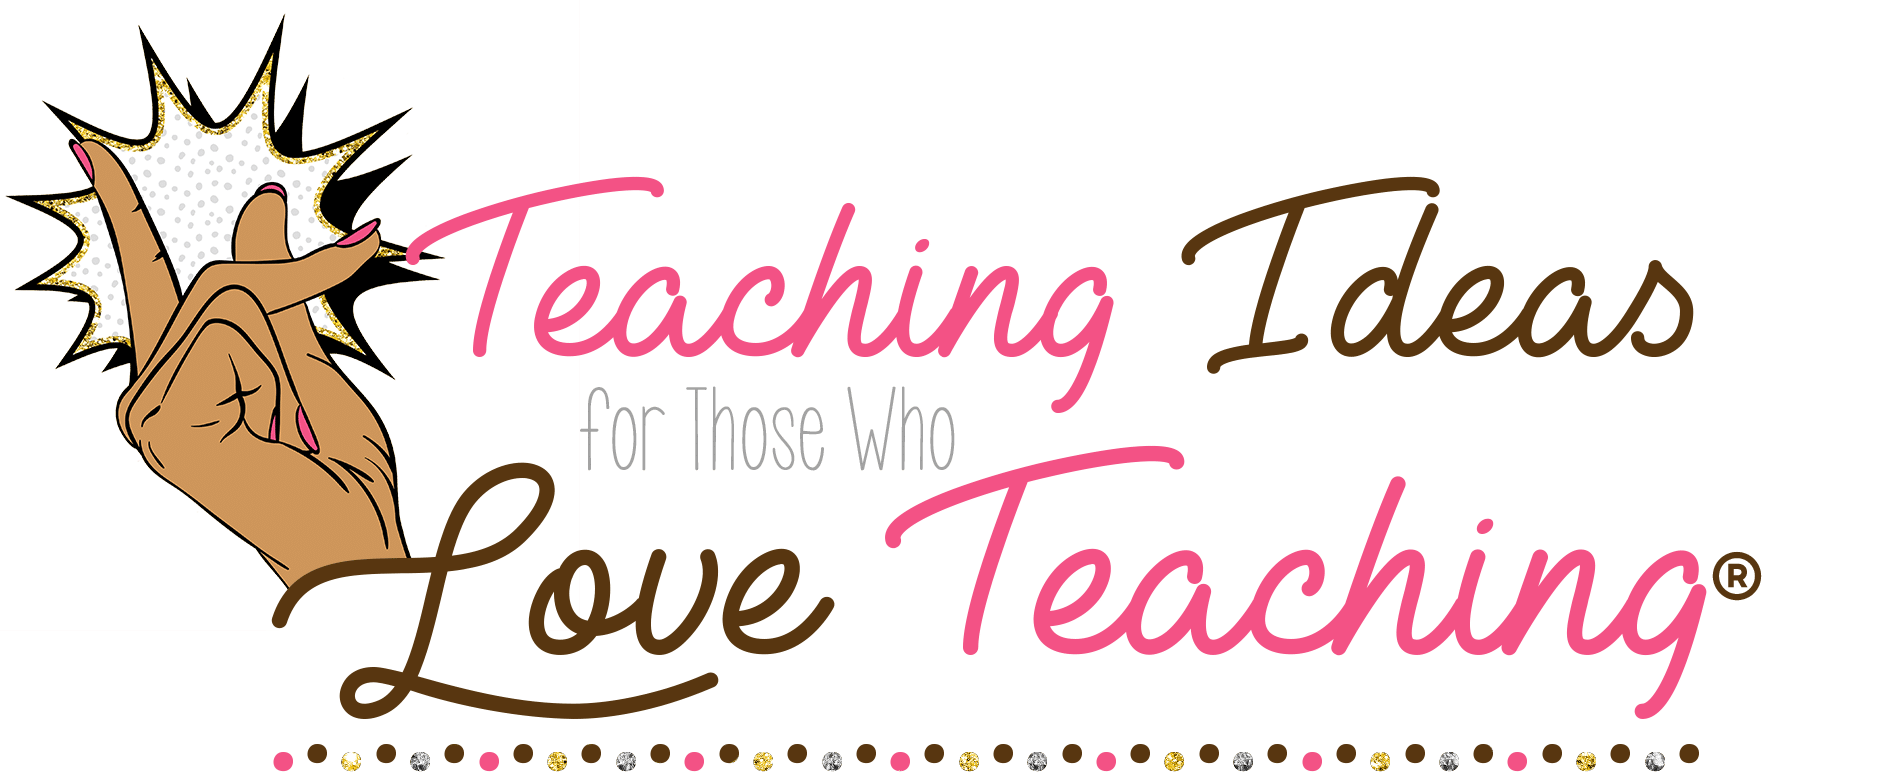 Teaching Ideas For Those Who Love Teaching